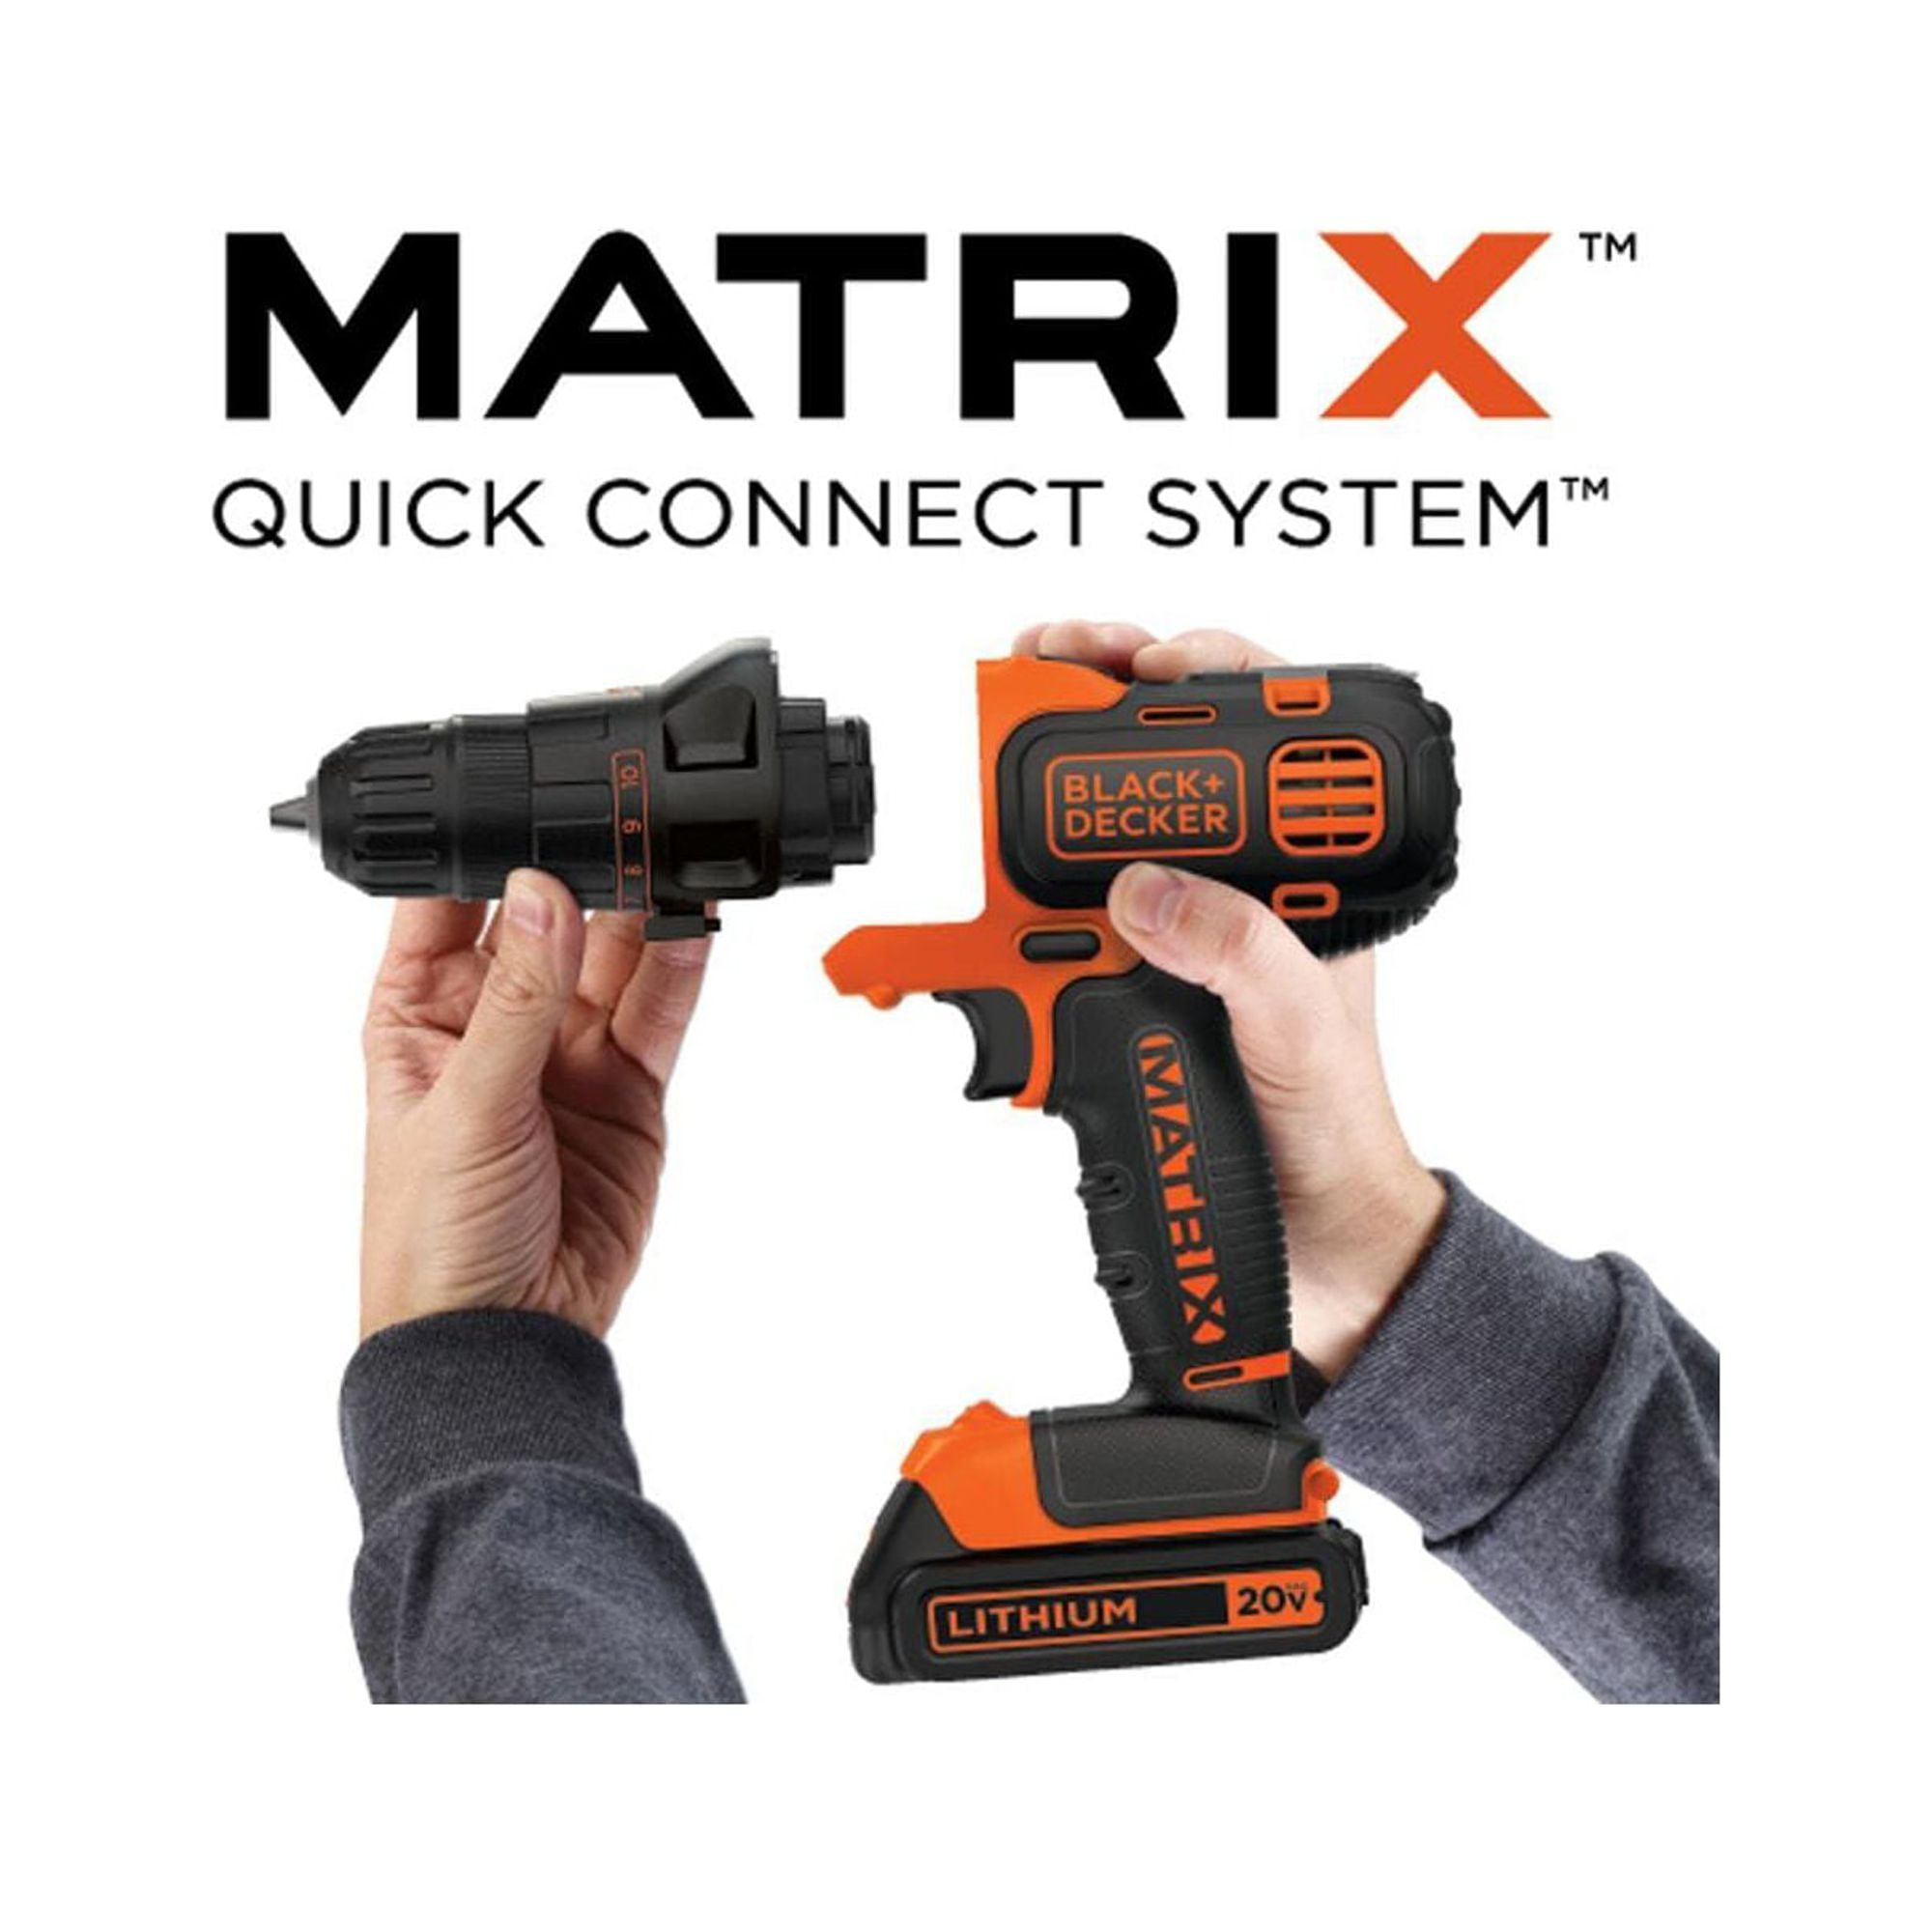 BLACK+DECKER 20V MAX Matrix Cordless Drill/Driver (BDCDMT120C), Drill Kit  (Orange)